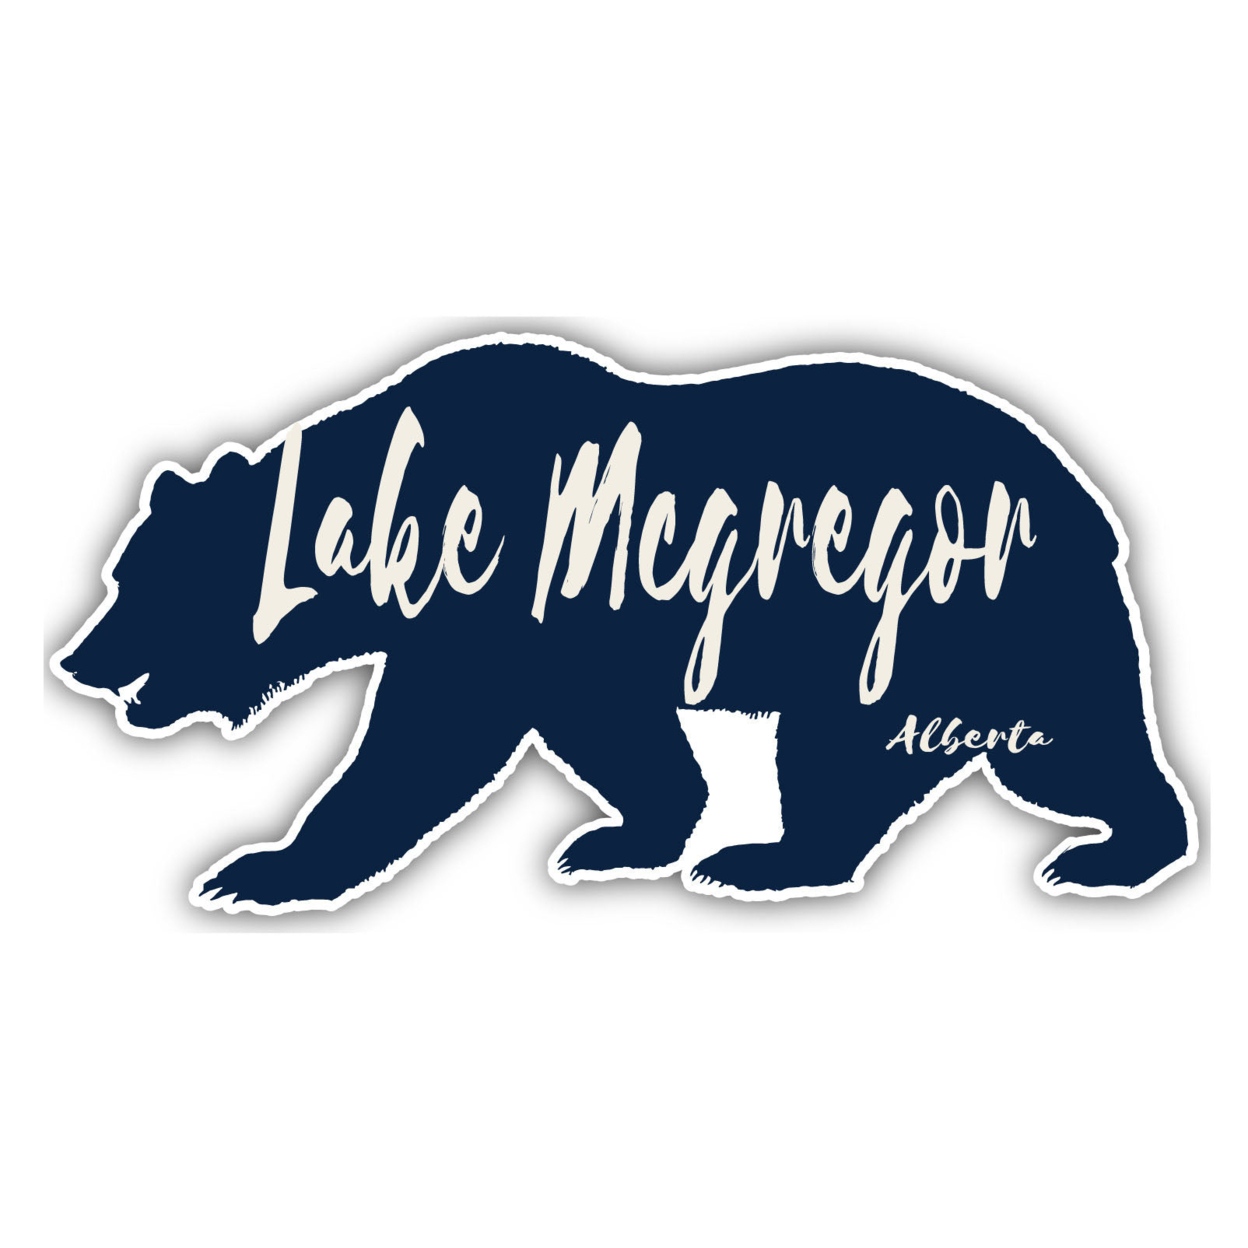 Lake Martinez Arizona Souvenir Decorative Stickers (Choose Theme And Size) - 2-Inch, Bear